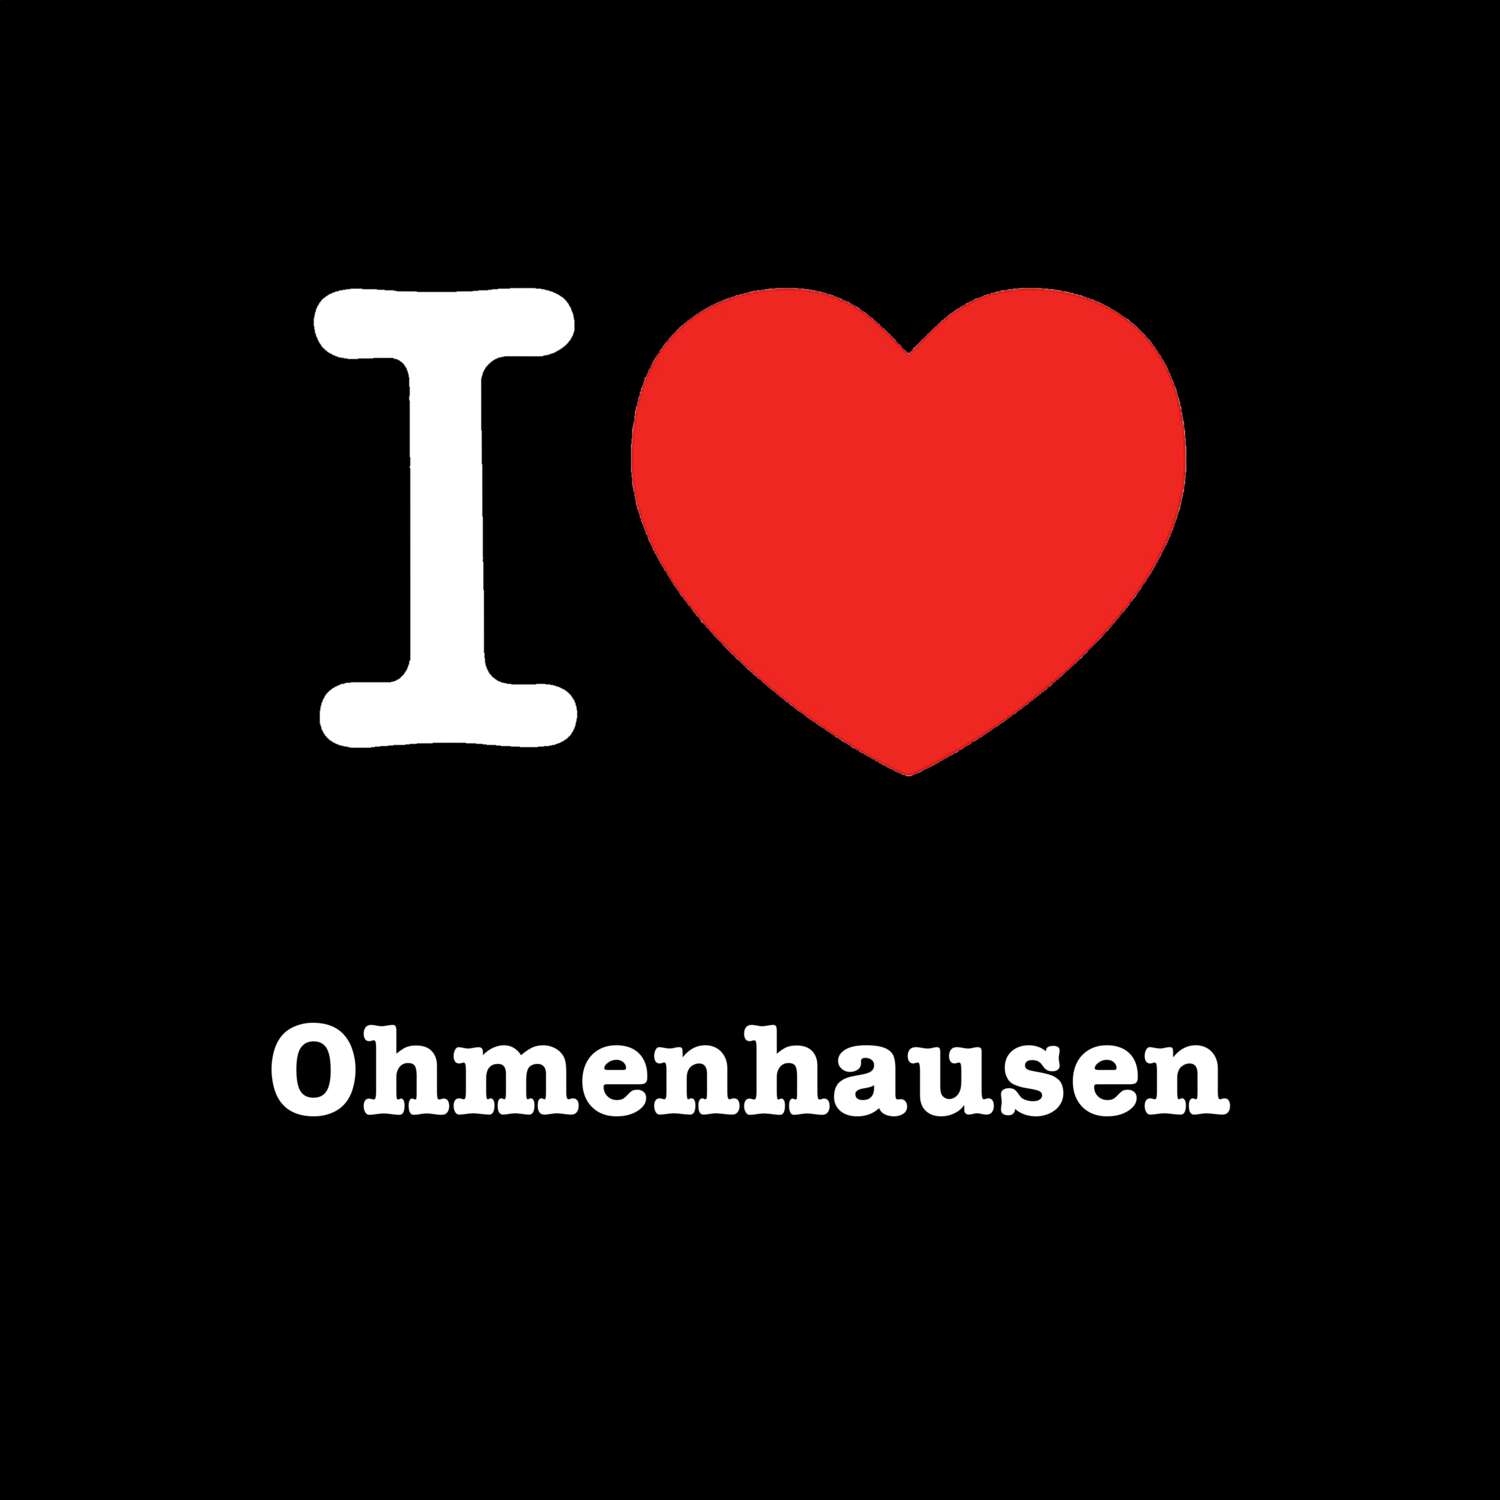 Ohmenhausen T-Shirt »I love«